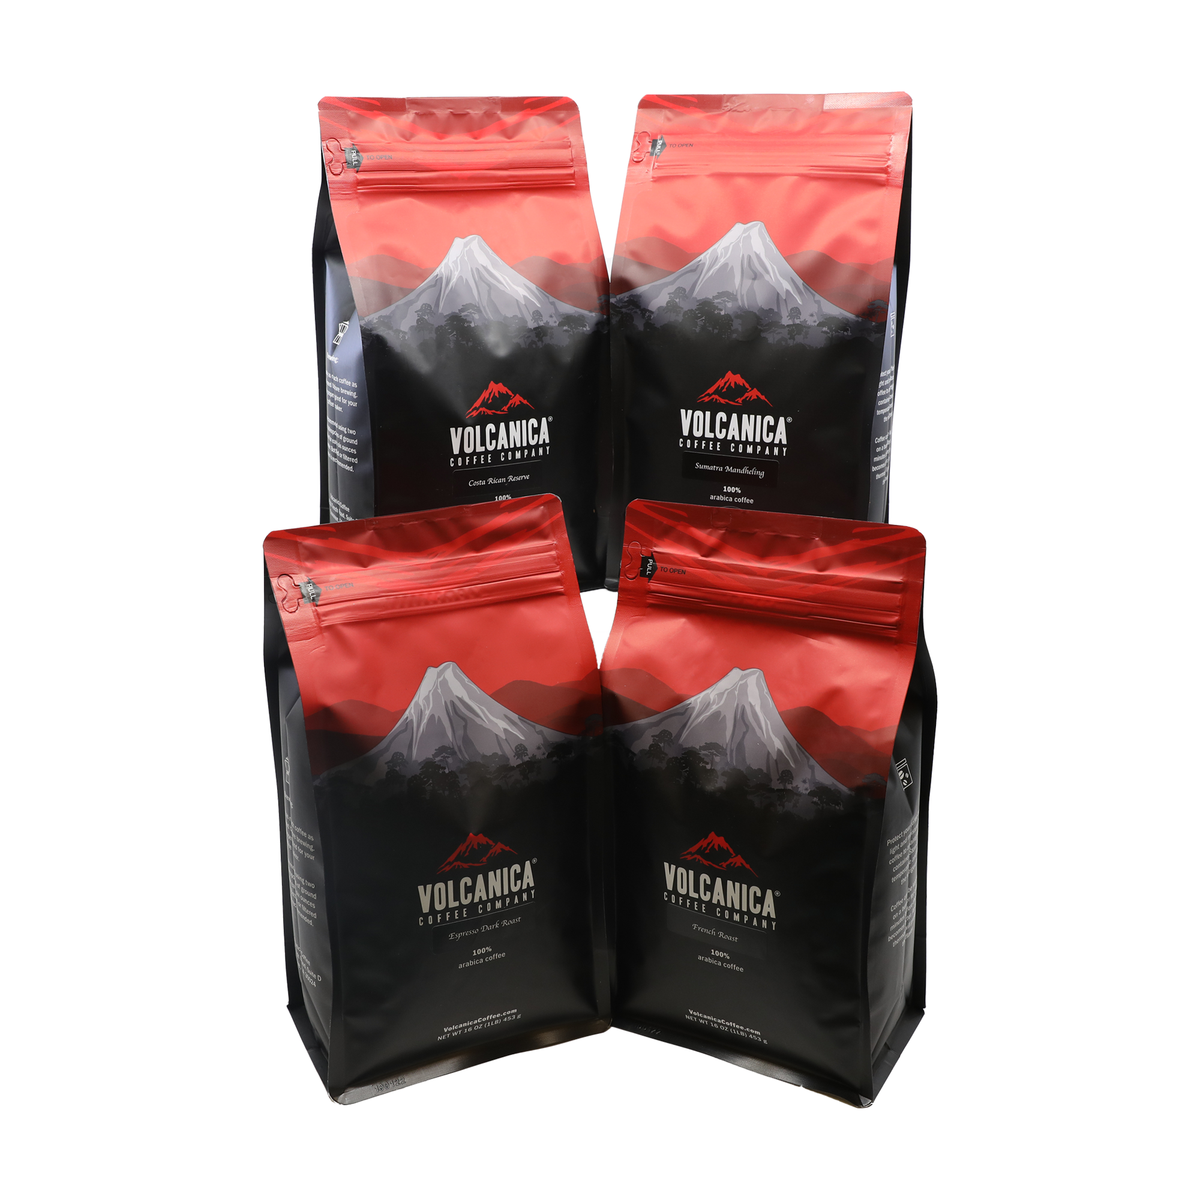 Dark Roast Coffee Bundle Gift Box - Volcanica Coffee